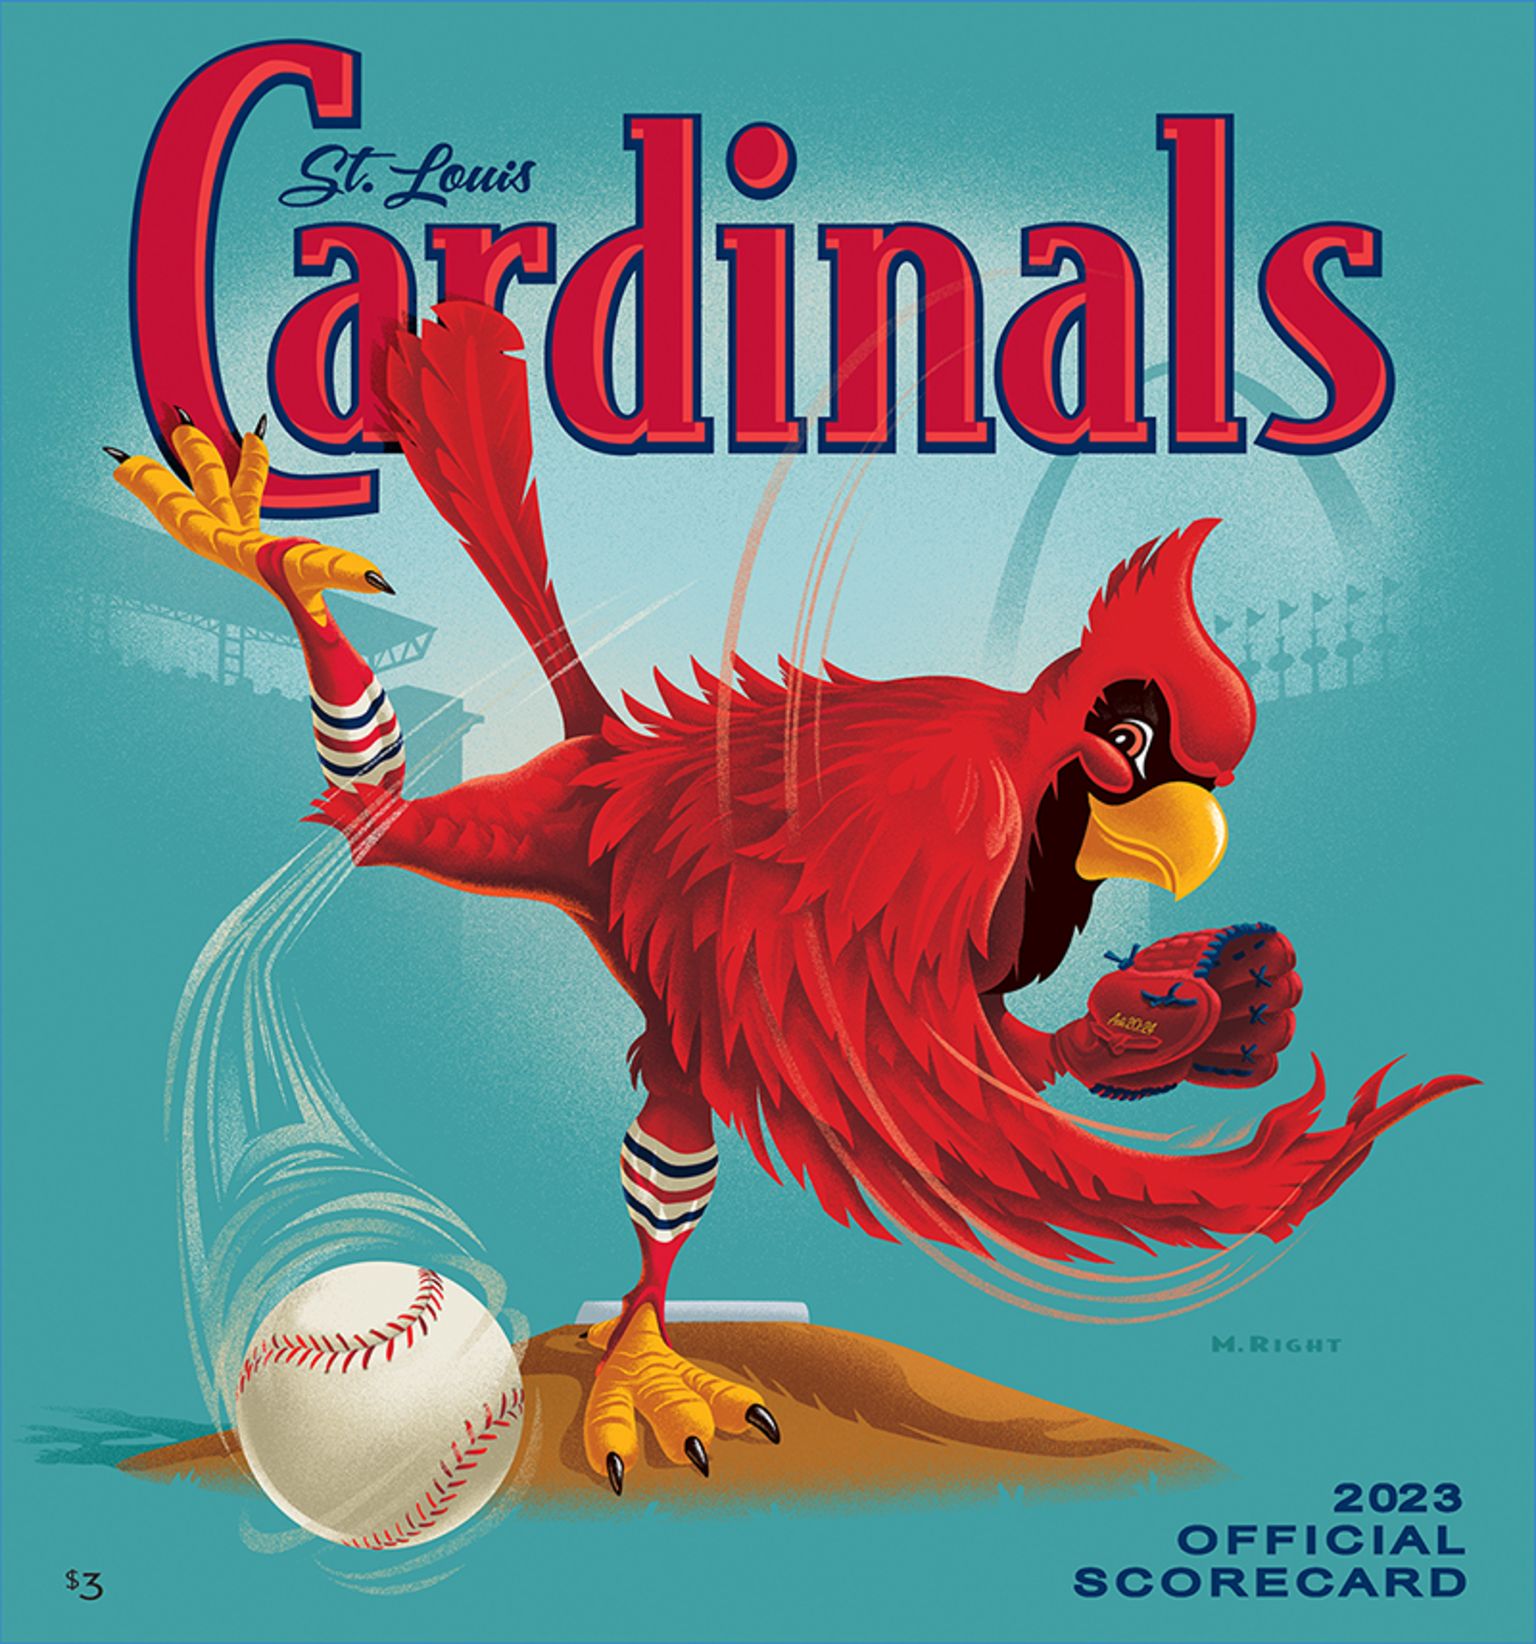 St. Louis Cardinals Scorecard Holder Yardage Book Cover 